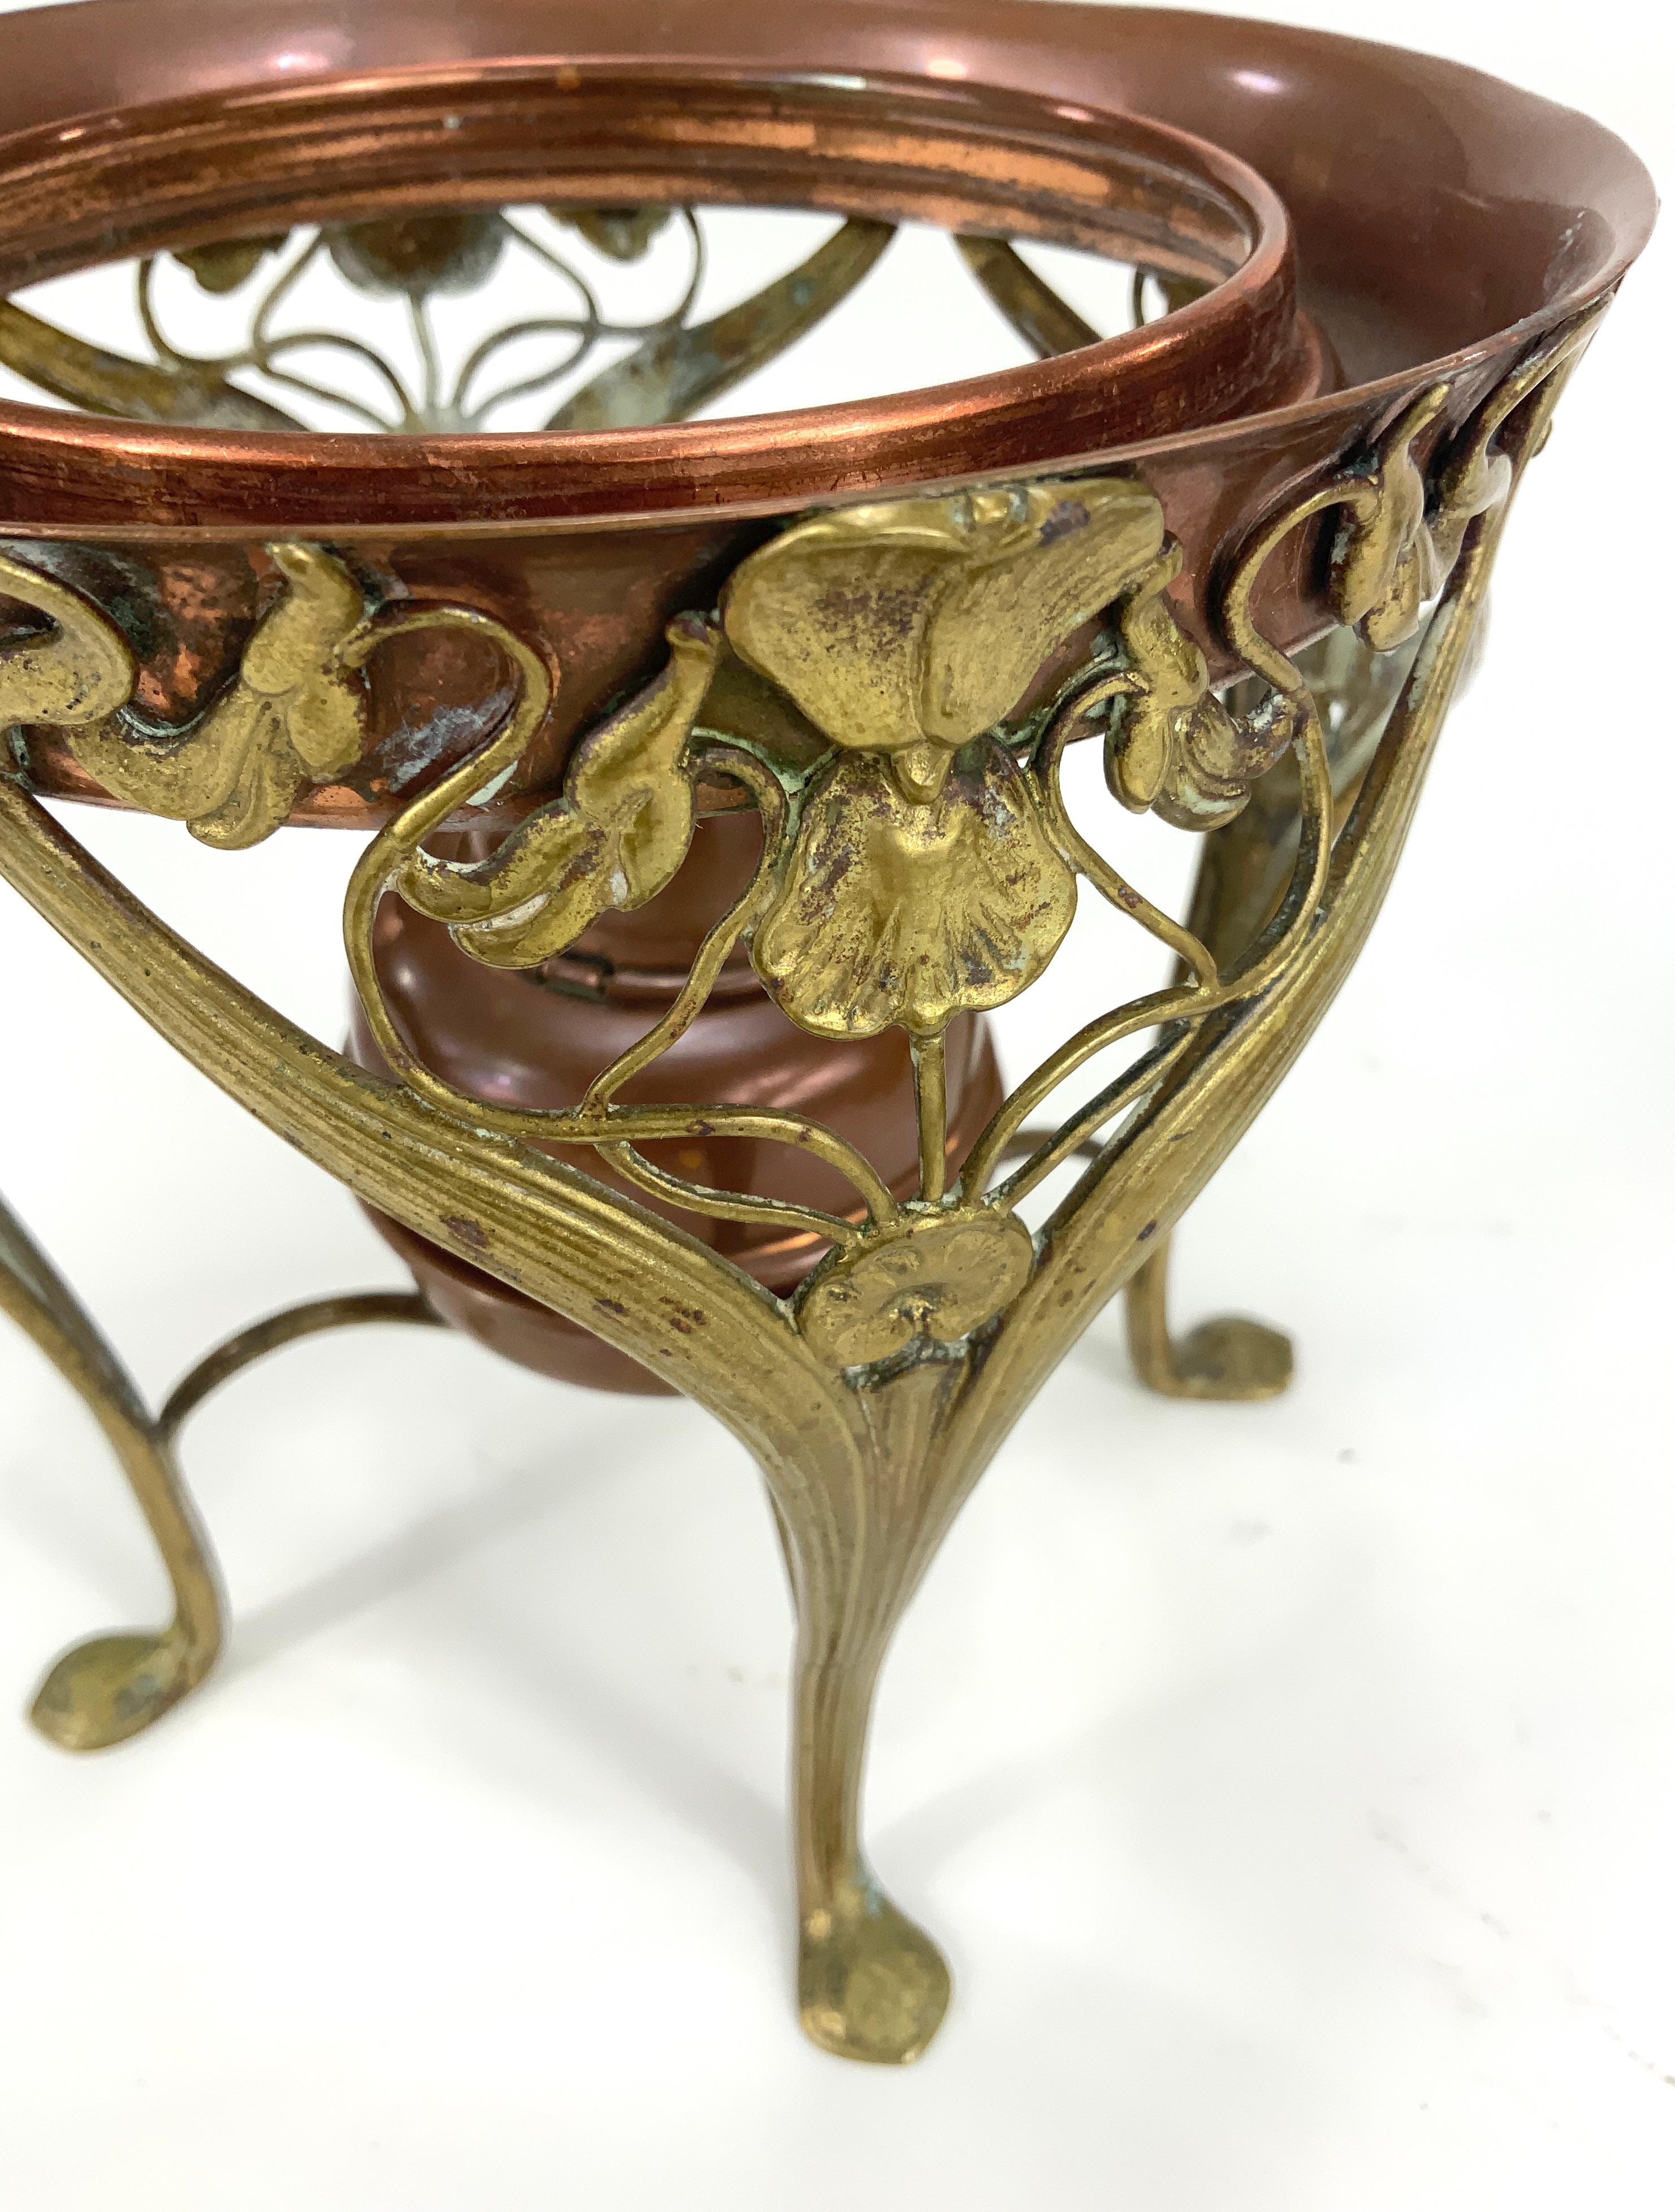 Brass Carl Deffner Art Nouveau Copper Tea Kettle on a Comfort, circa 1895-1900 For Sale